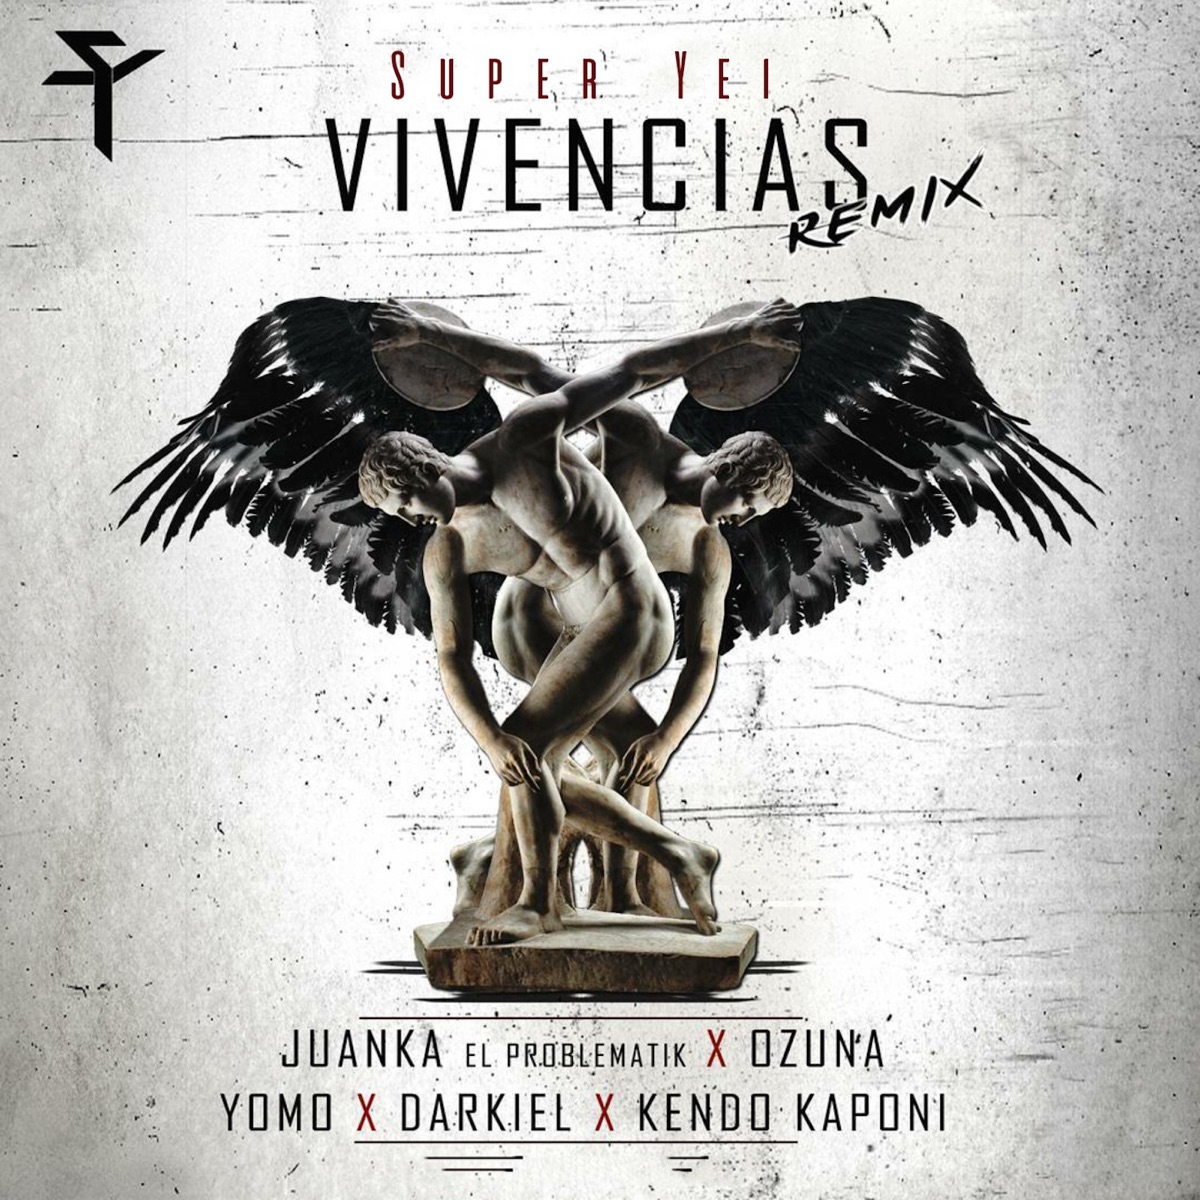 Vivencias Album Cover By Super Yei